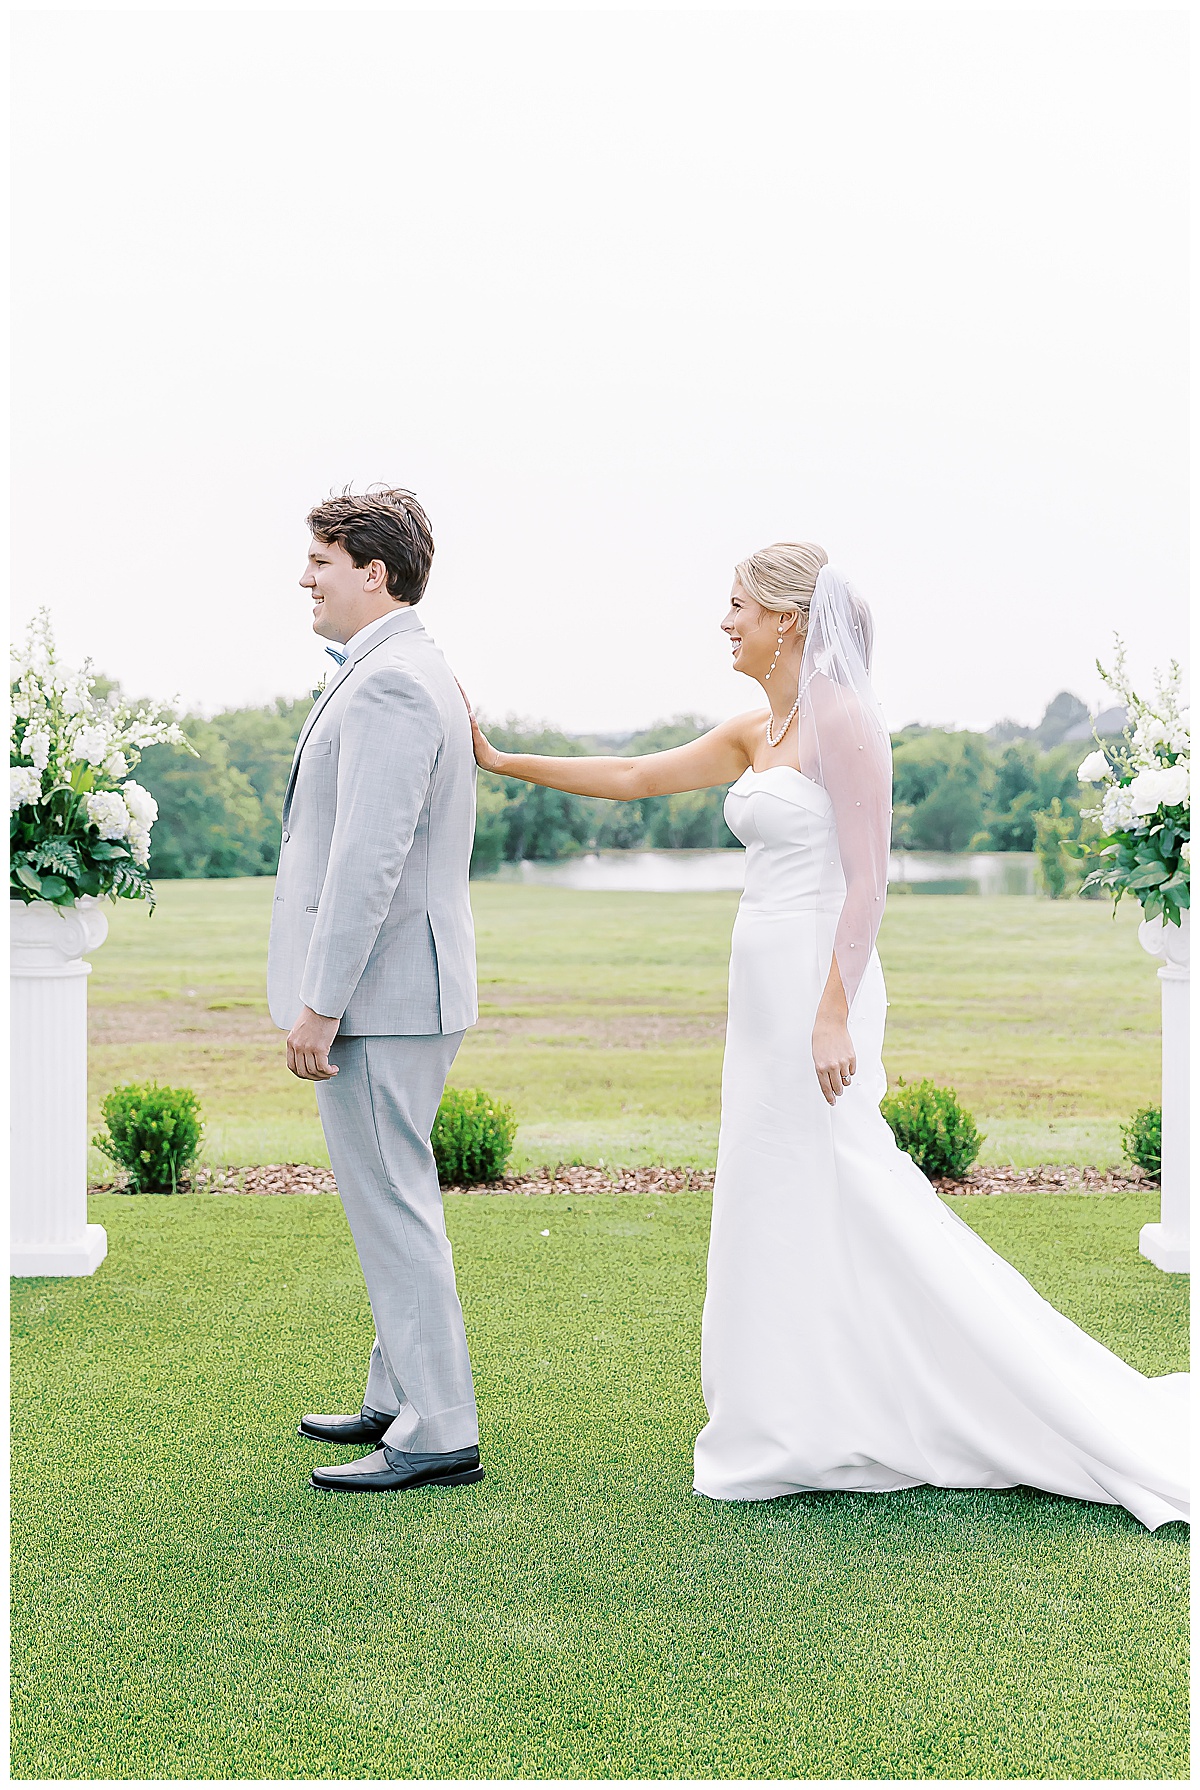 Jordan and Cameron's wedding at The Cinnamon Barn in Princeton, TX. #dallasweddingphotographer #bridesofnorthtx